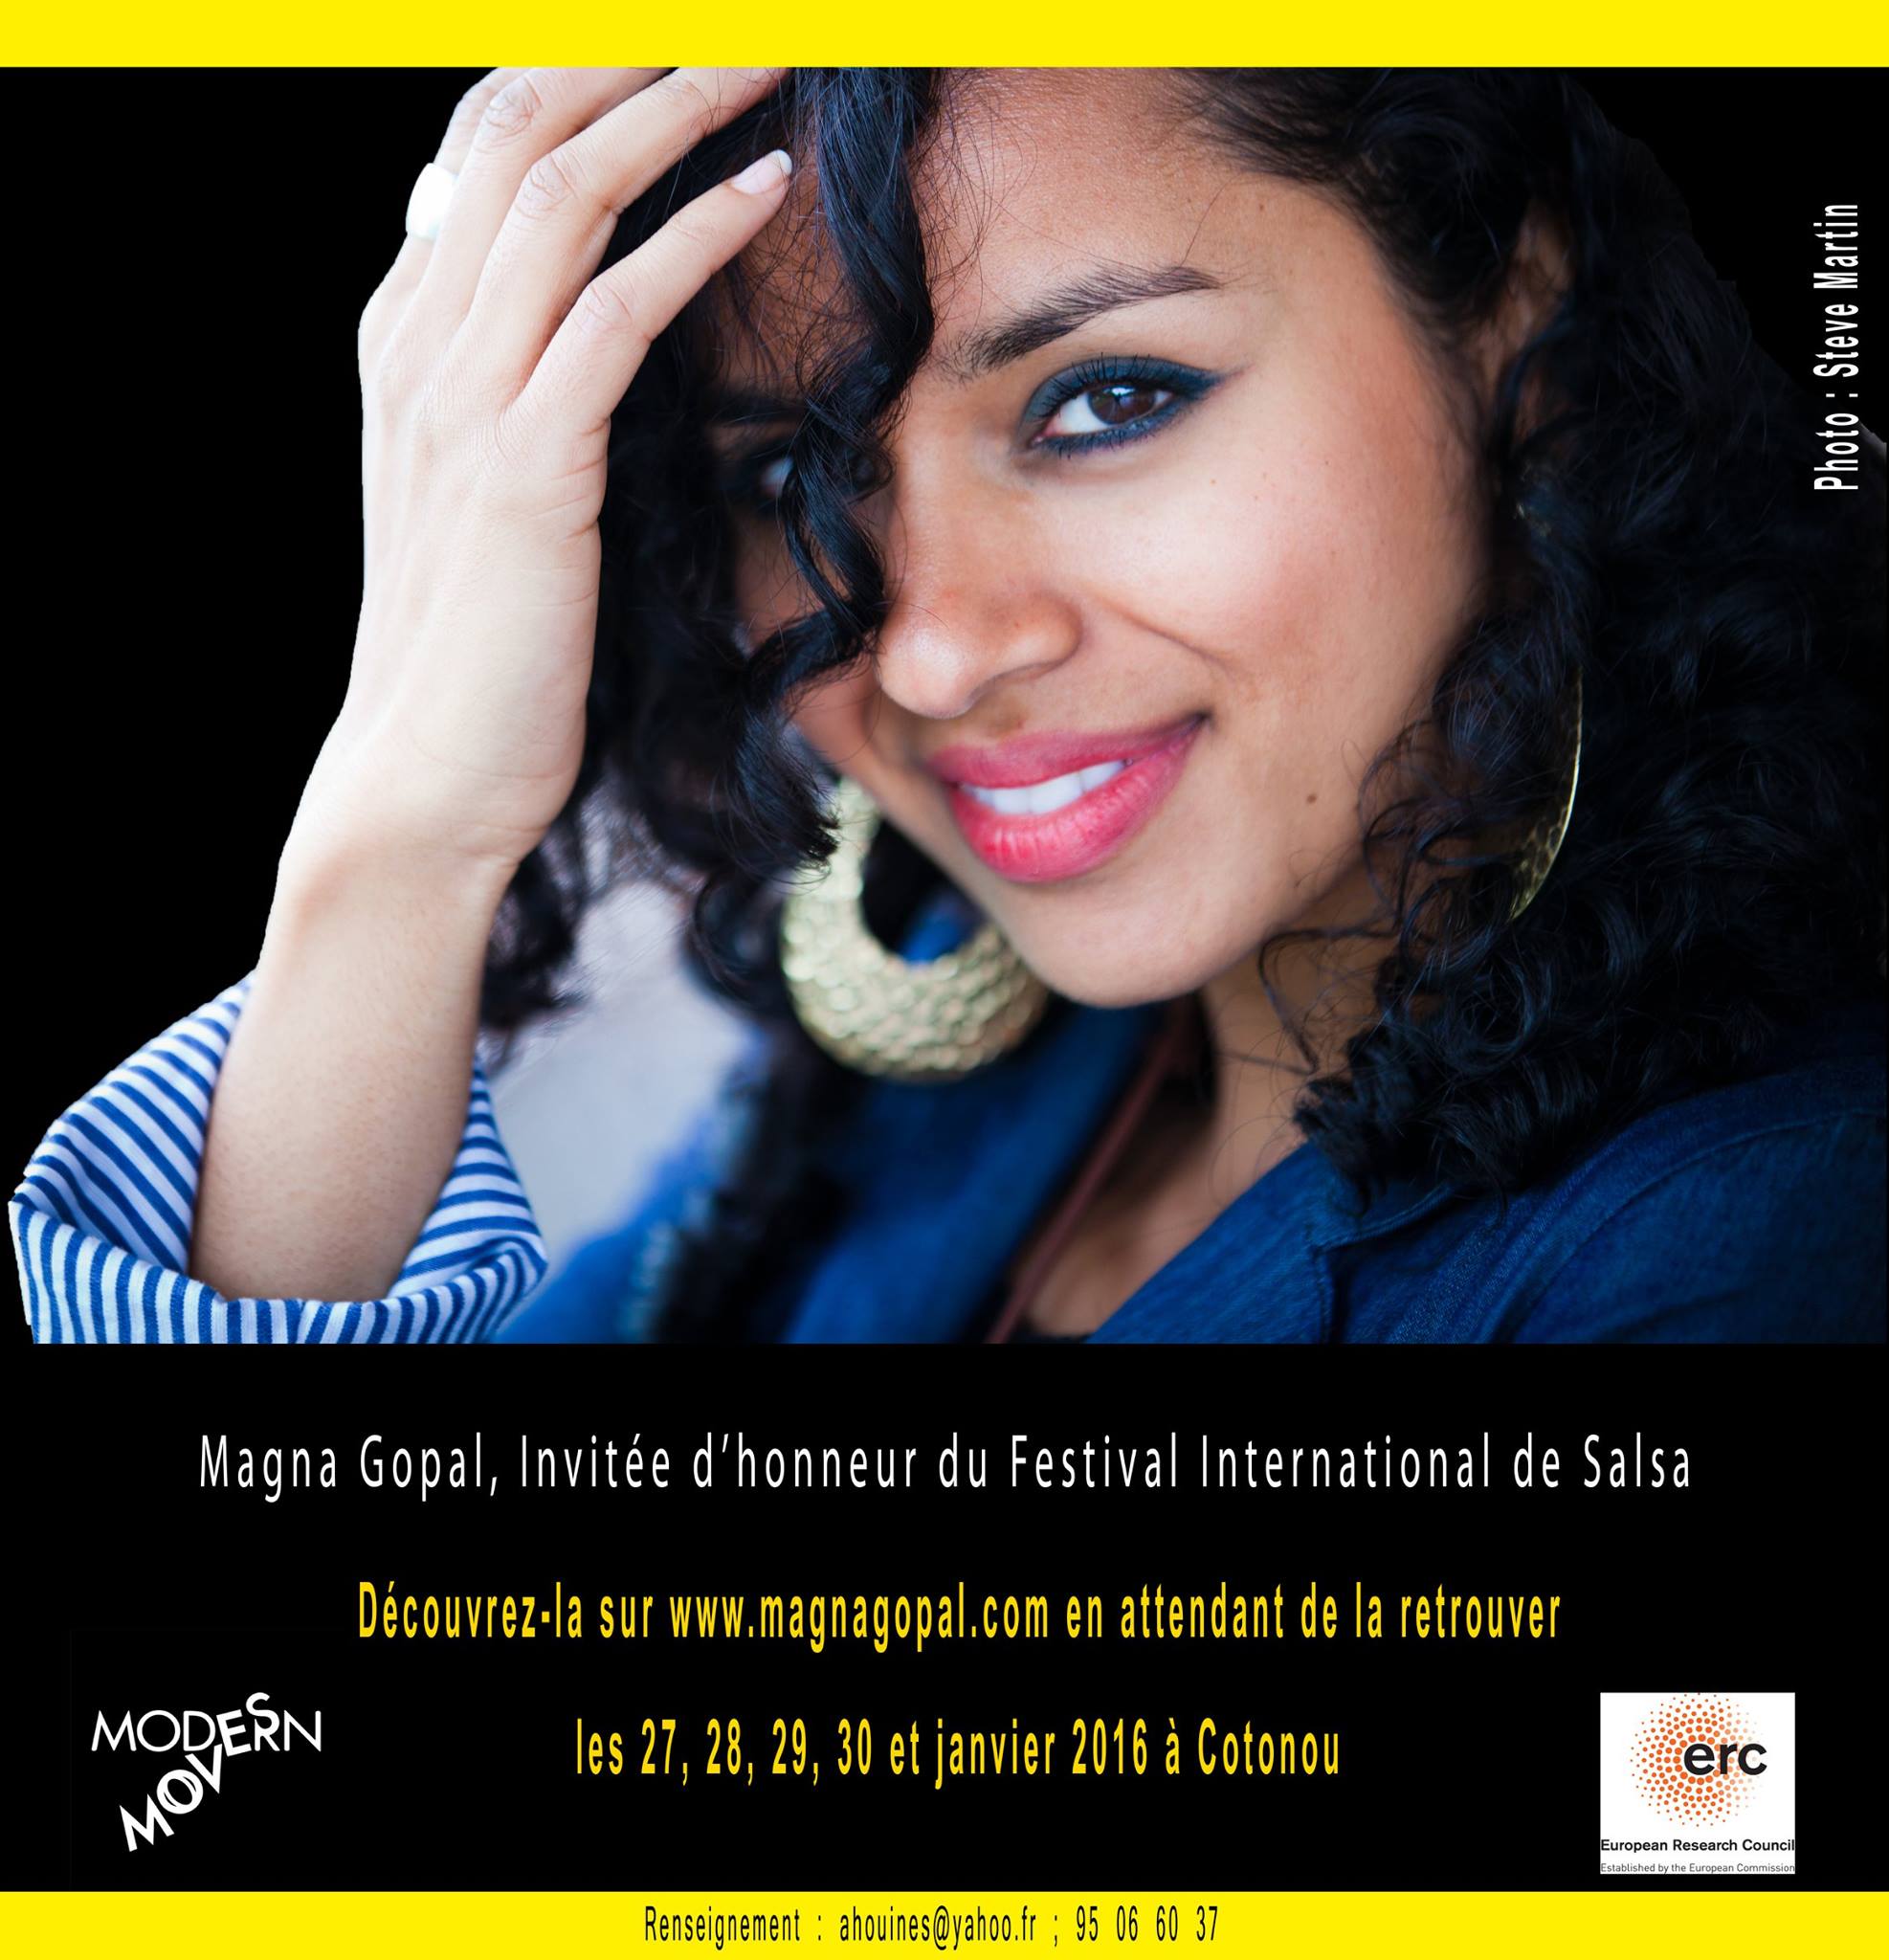 The International Salsa Festival announces Magna Gopal's participation